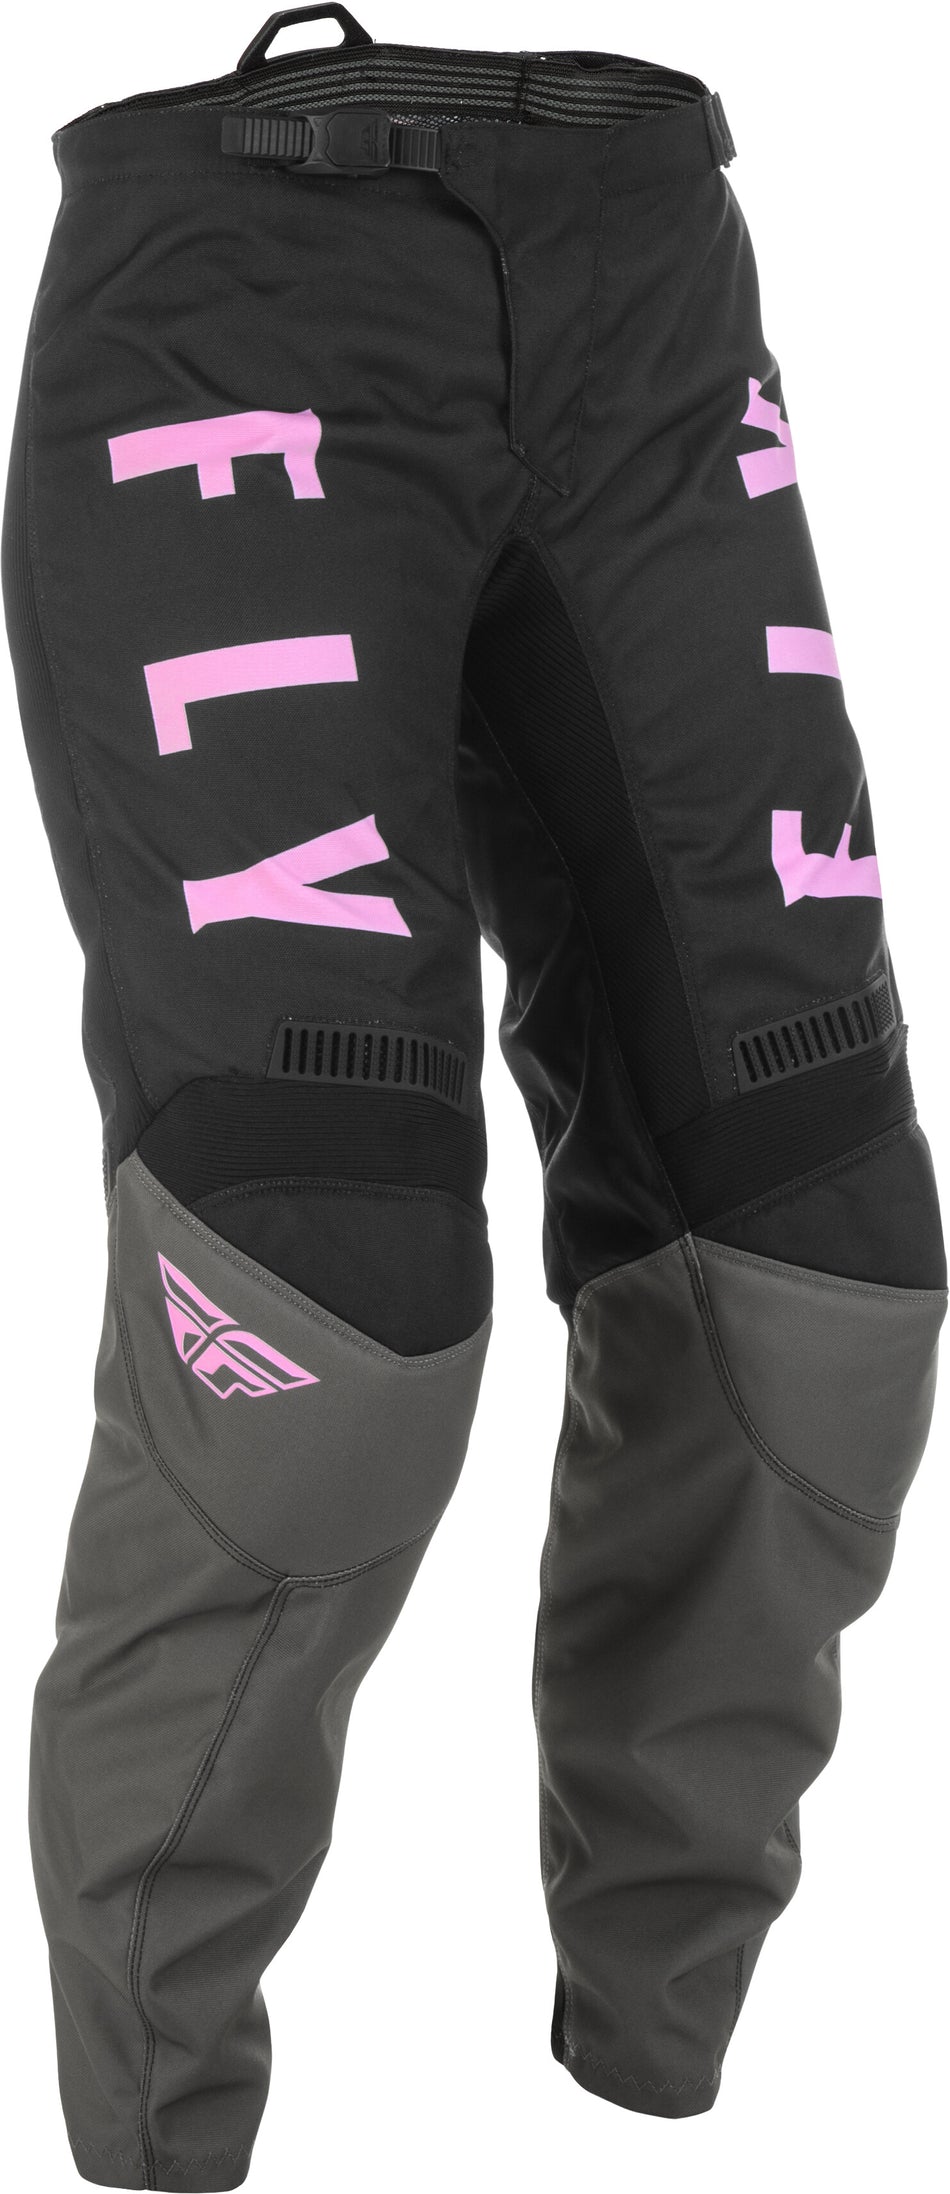 FLY RACING Women's F-16 Pants Grey/Black/Pink Sz 09/10 375-83108